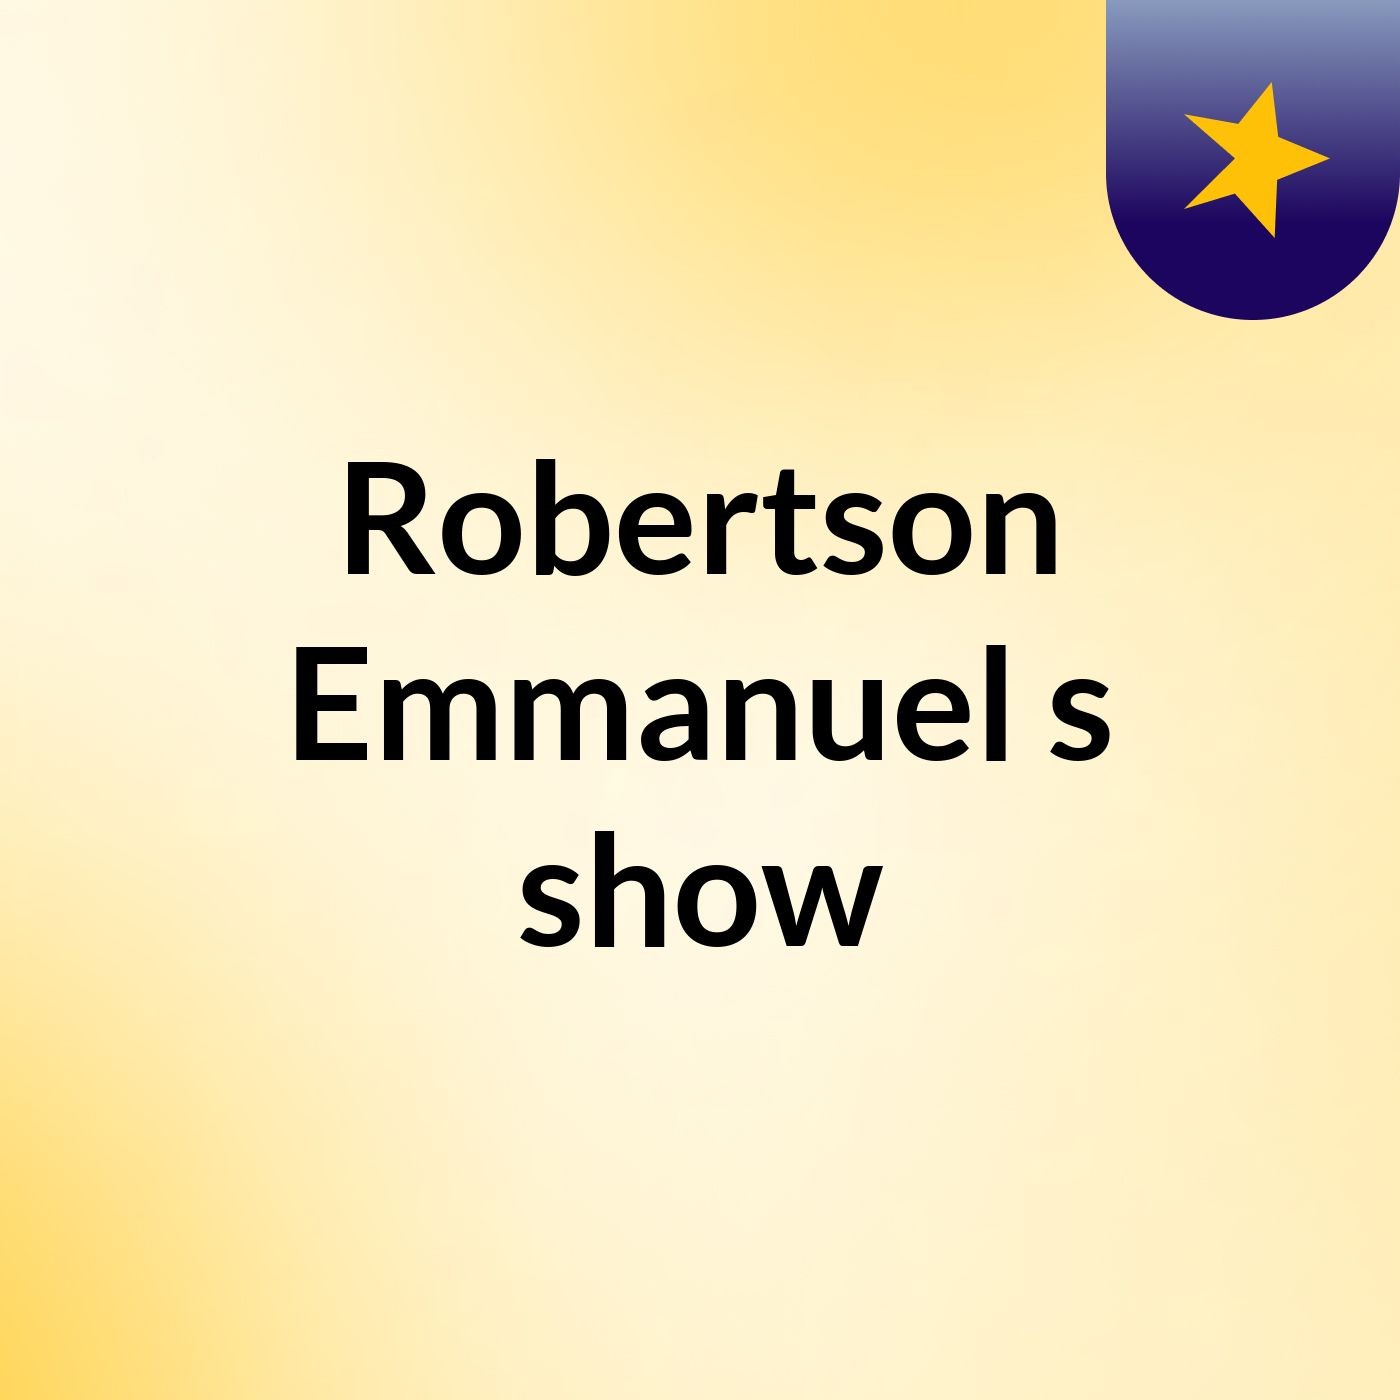 Robertson Emmanuel's show